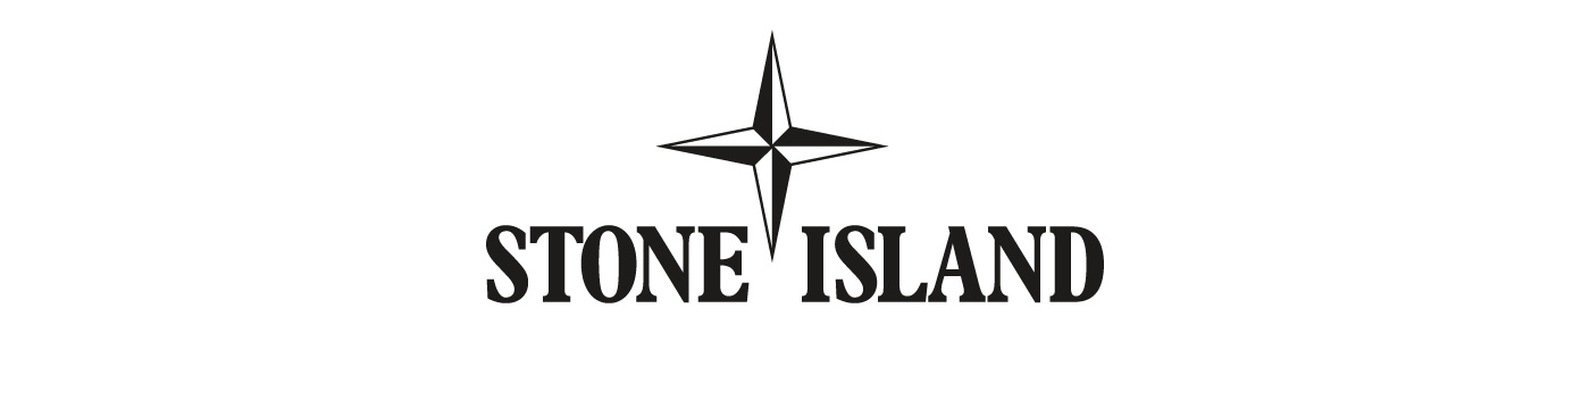 Фирма island. Стон Исланд лого. Значок Стоун Айленд. Шапка Stone Island. Stone Island логотип.